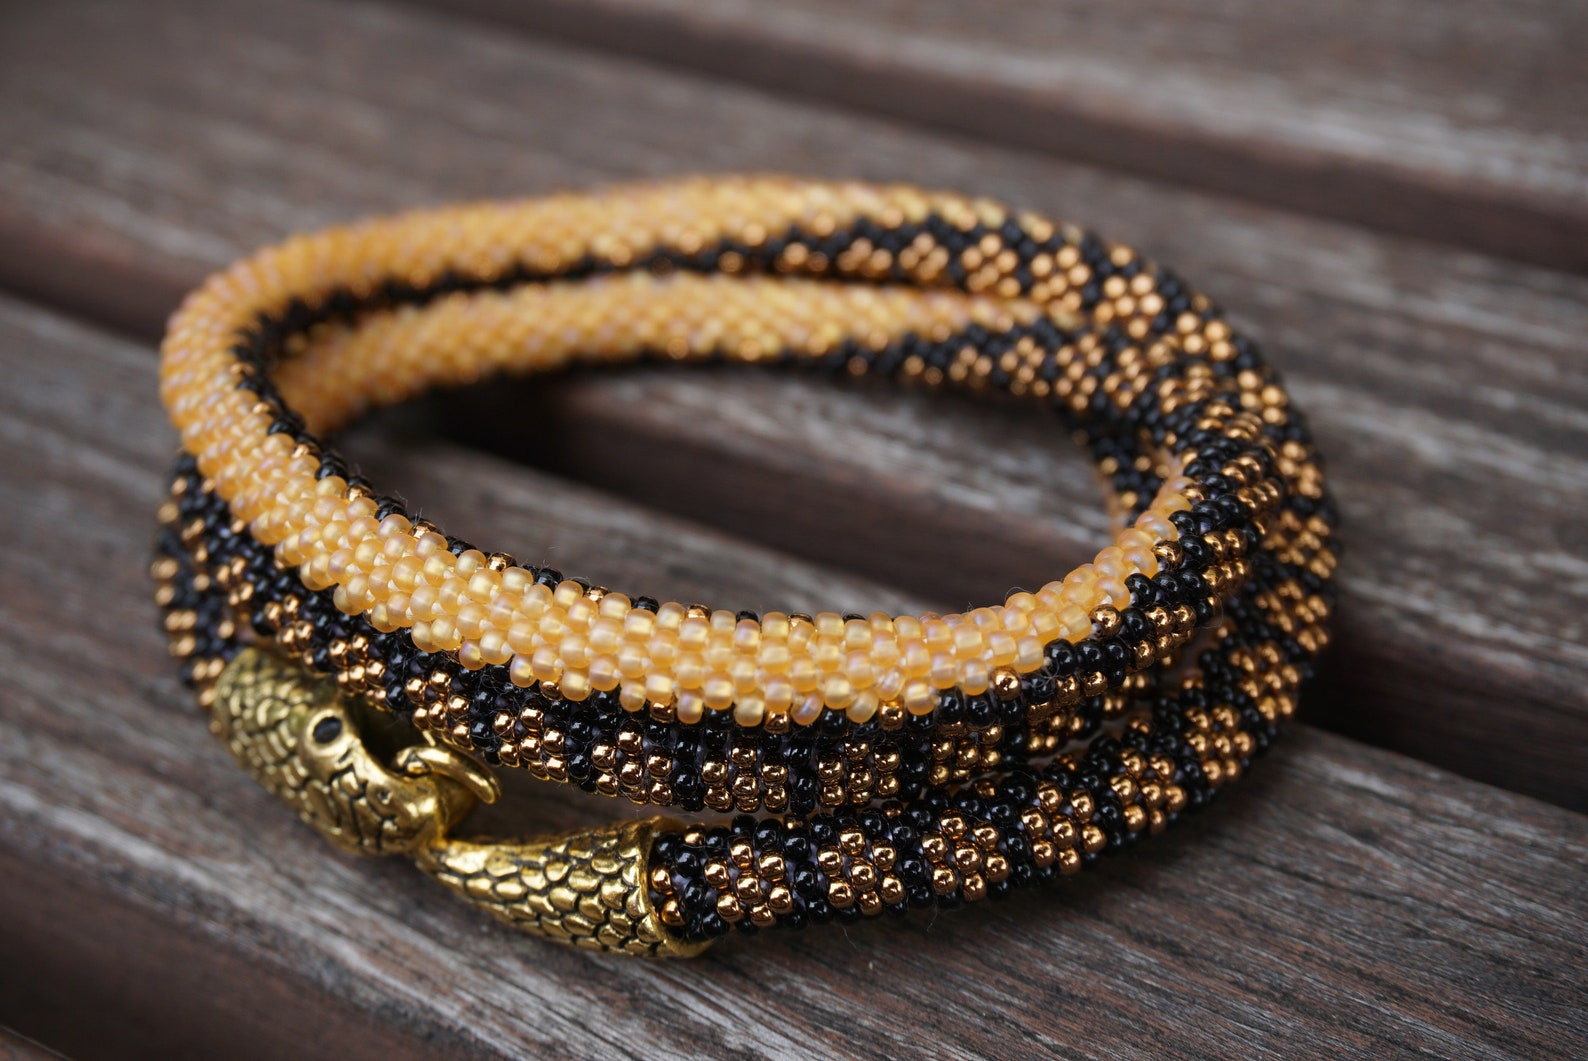 Snake necklace / snake bracelet / snake choker / ouroboro | Etsy